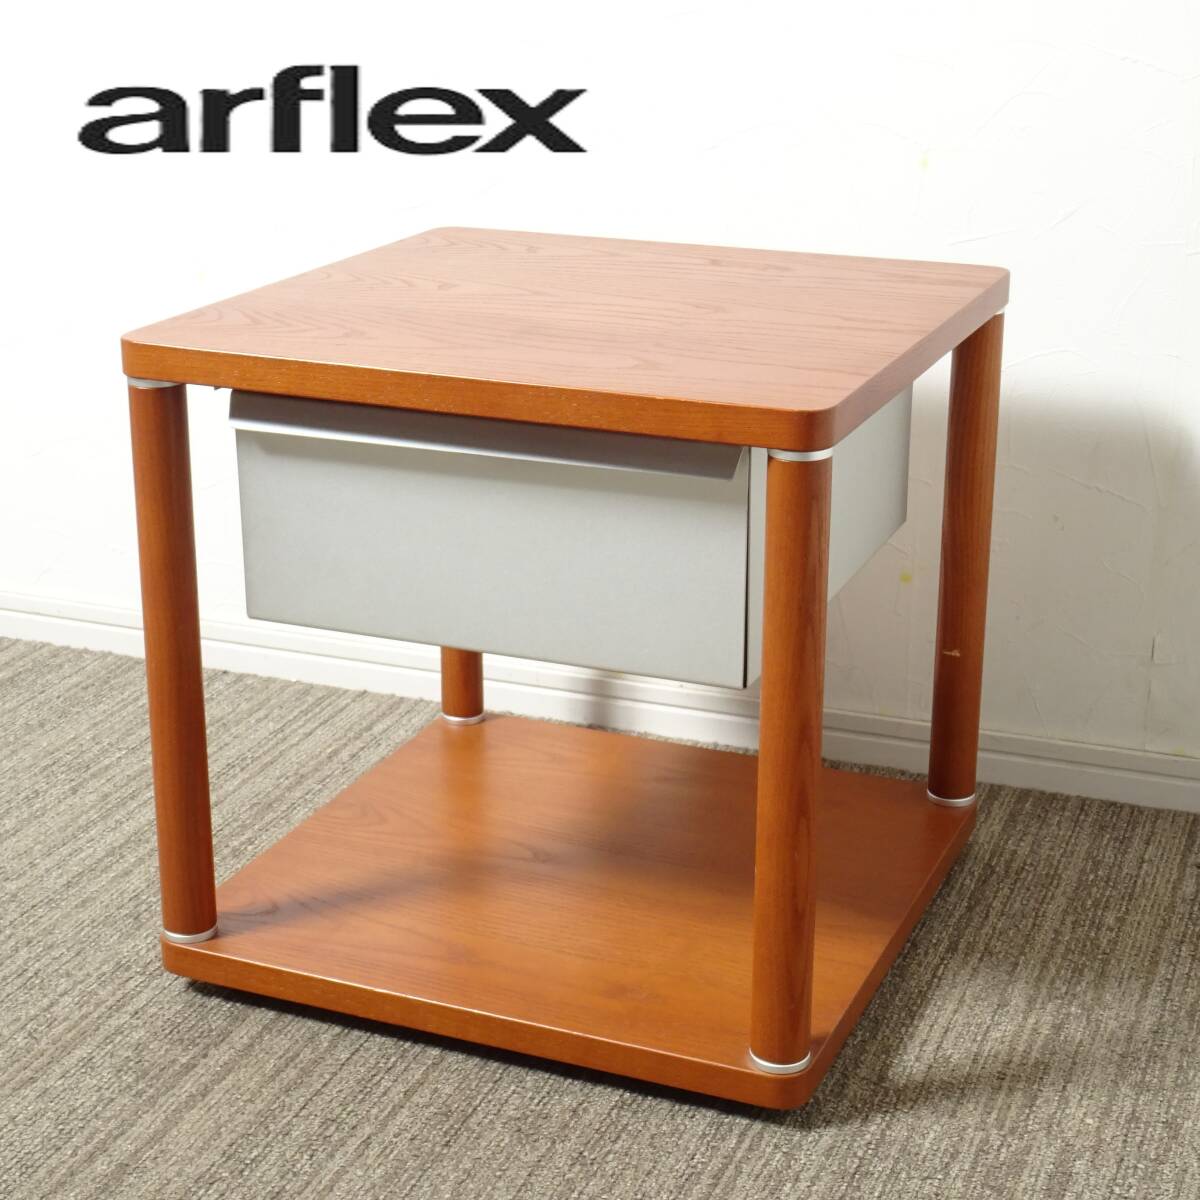 arflex アルフレックス FOREST サイドテーブル ナイトテーブルの画像1